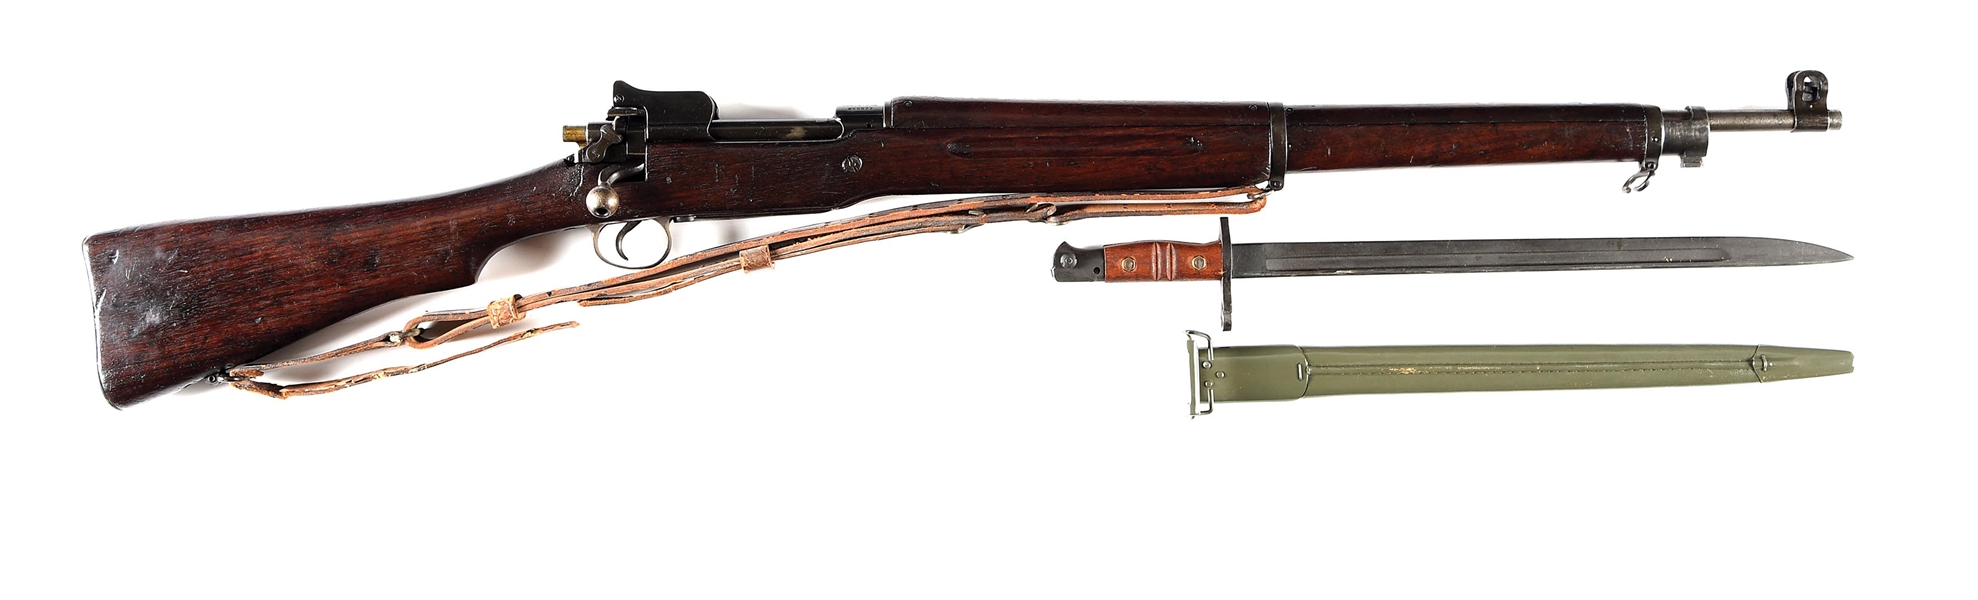 (C) US M1917 EDDYSTONE BOLT ACTION RIFLE (1918).